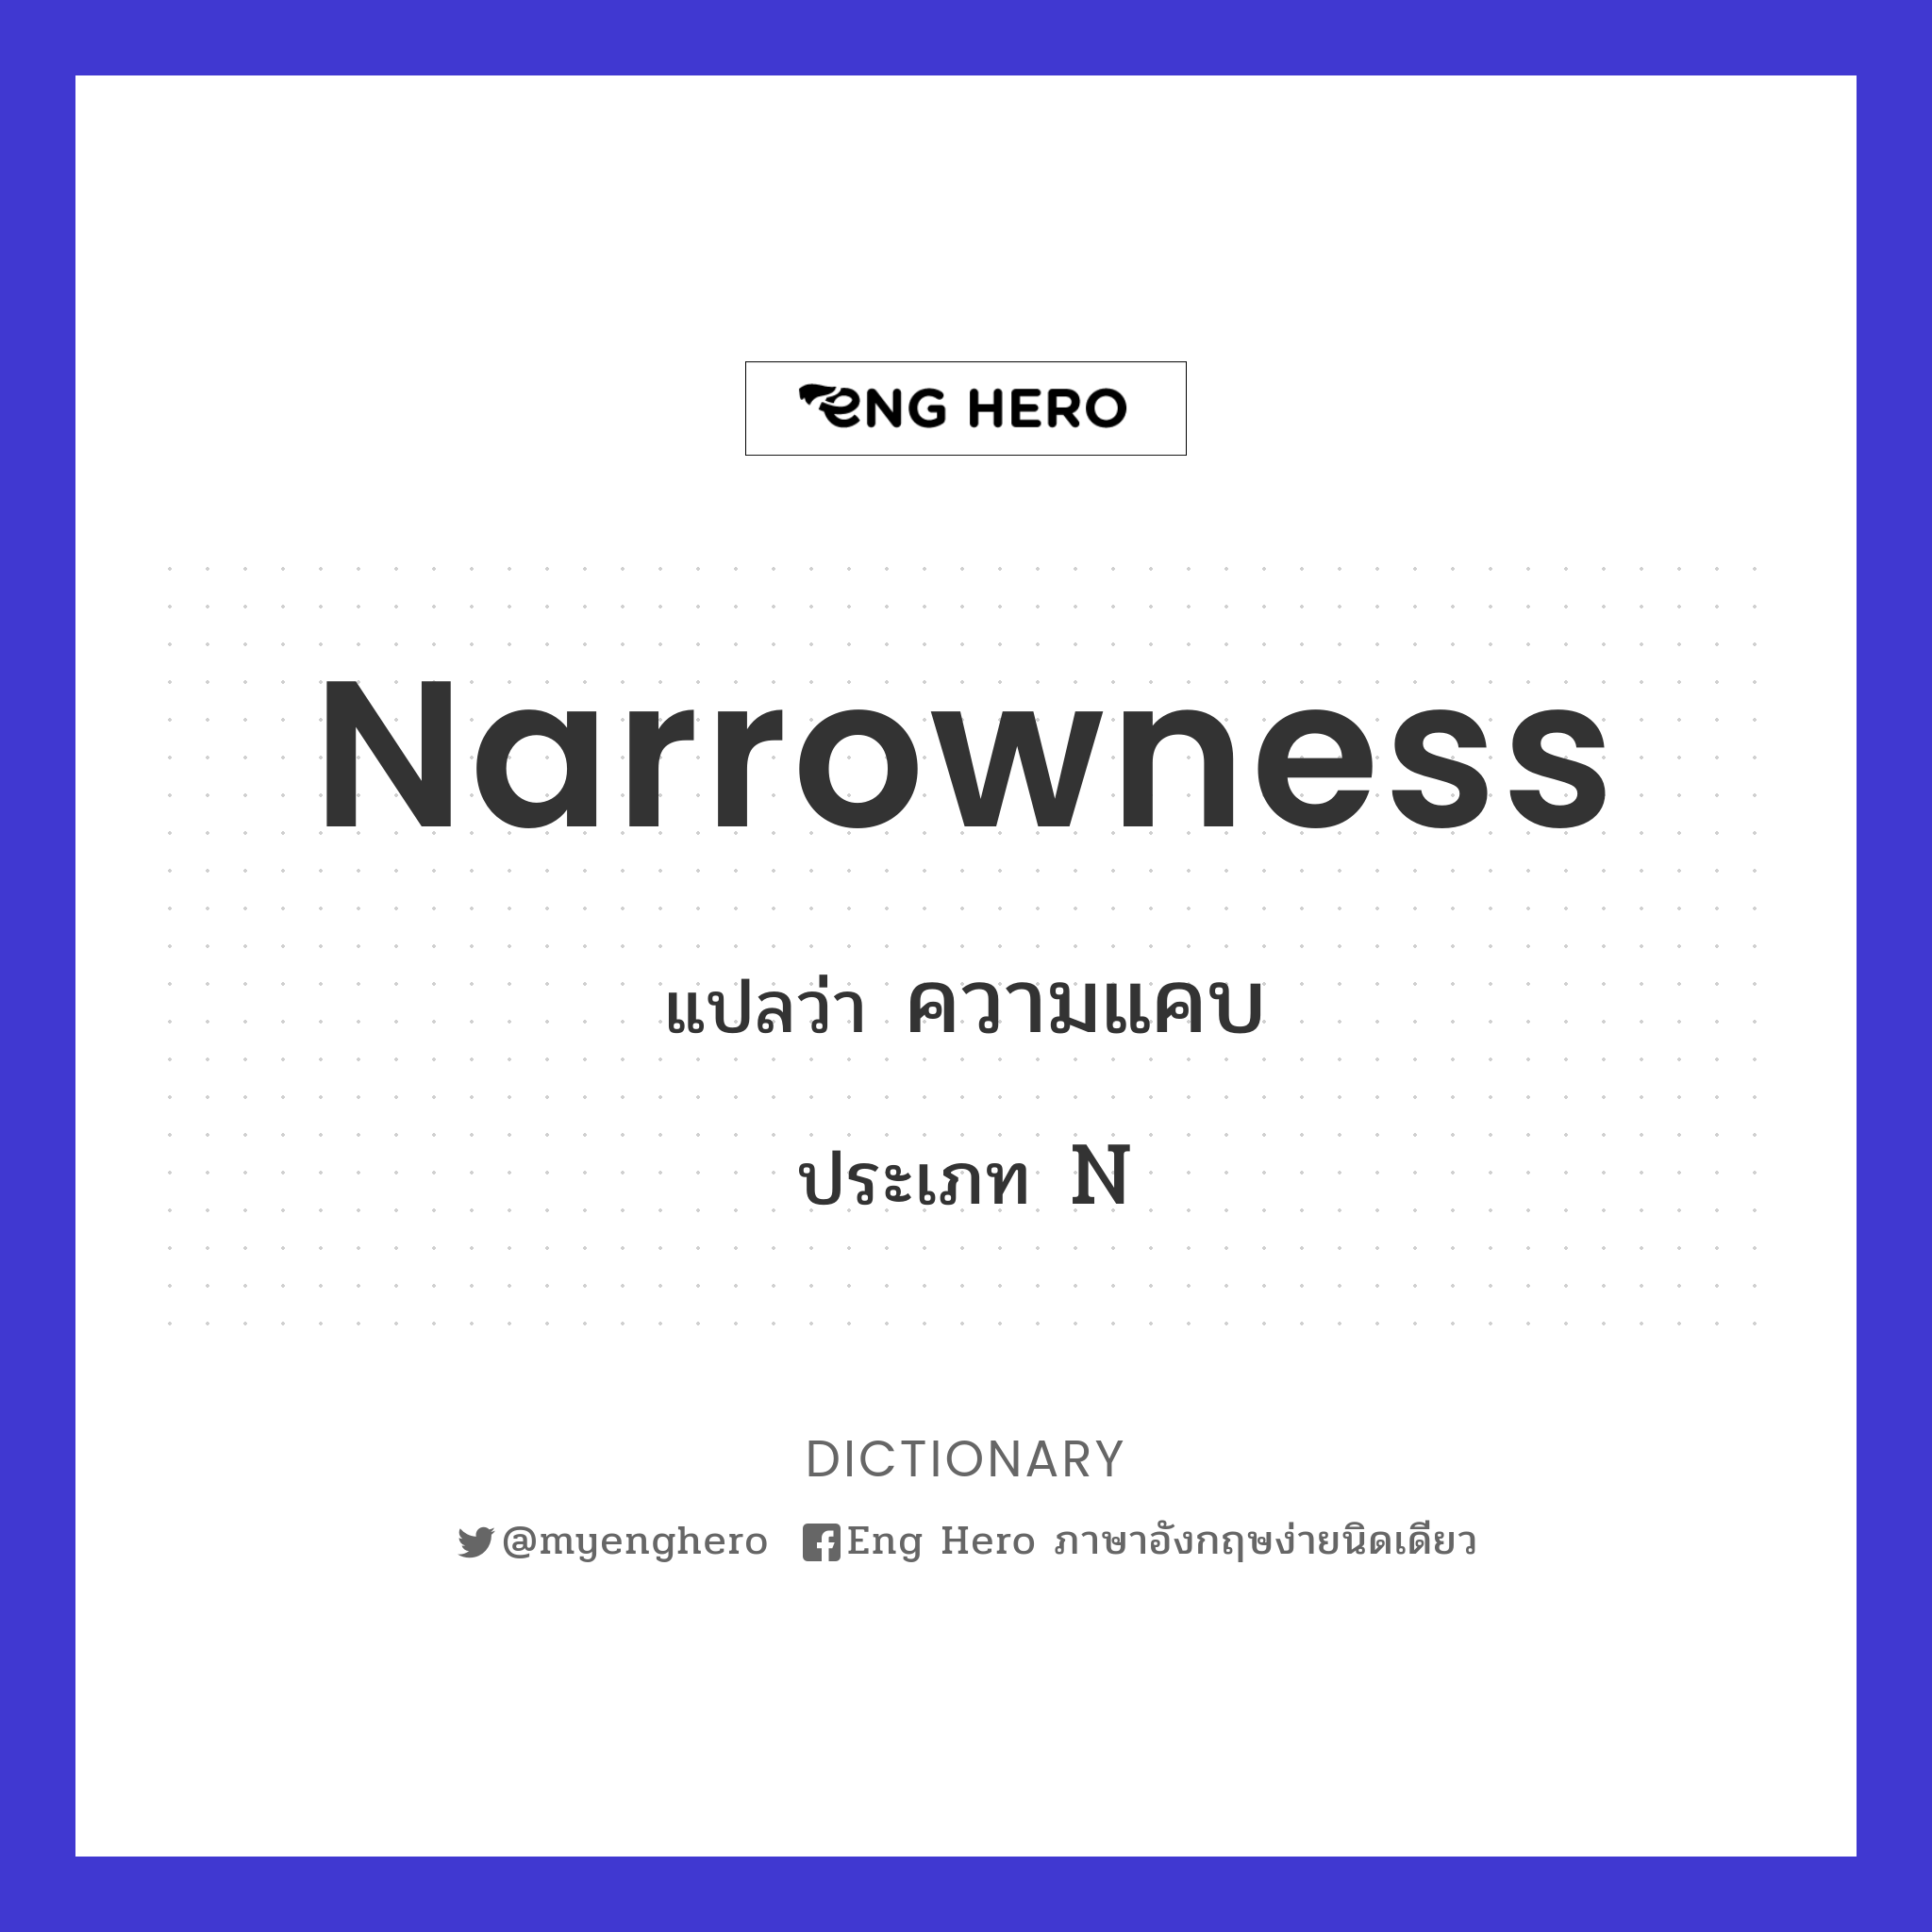 narrowness